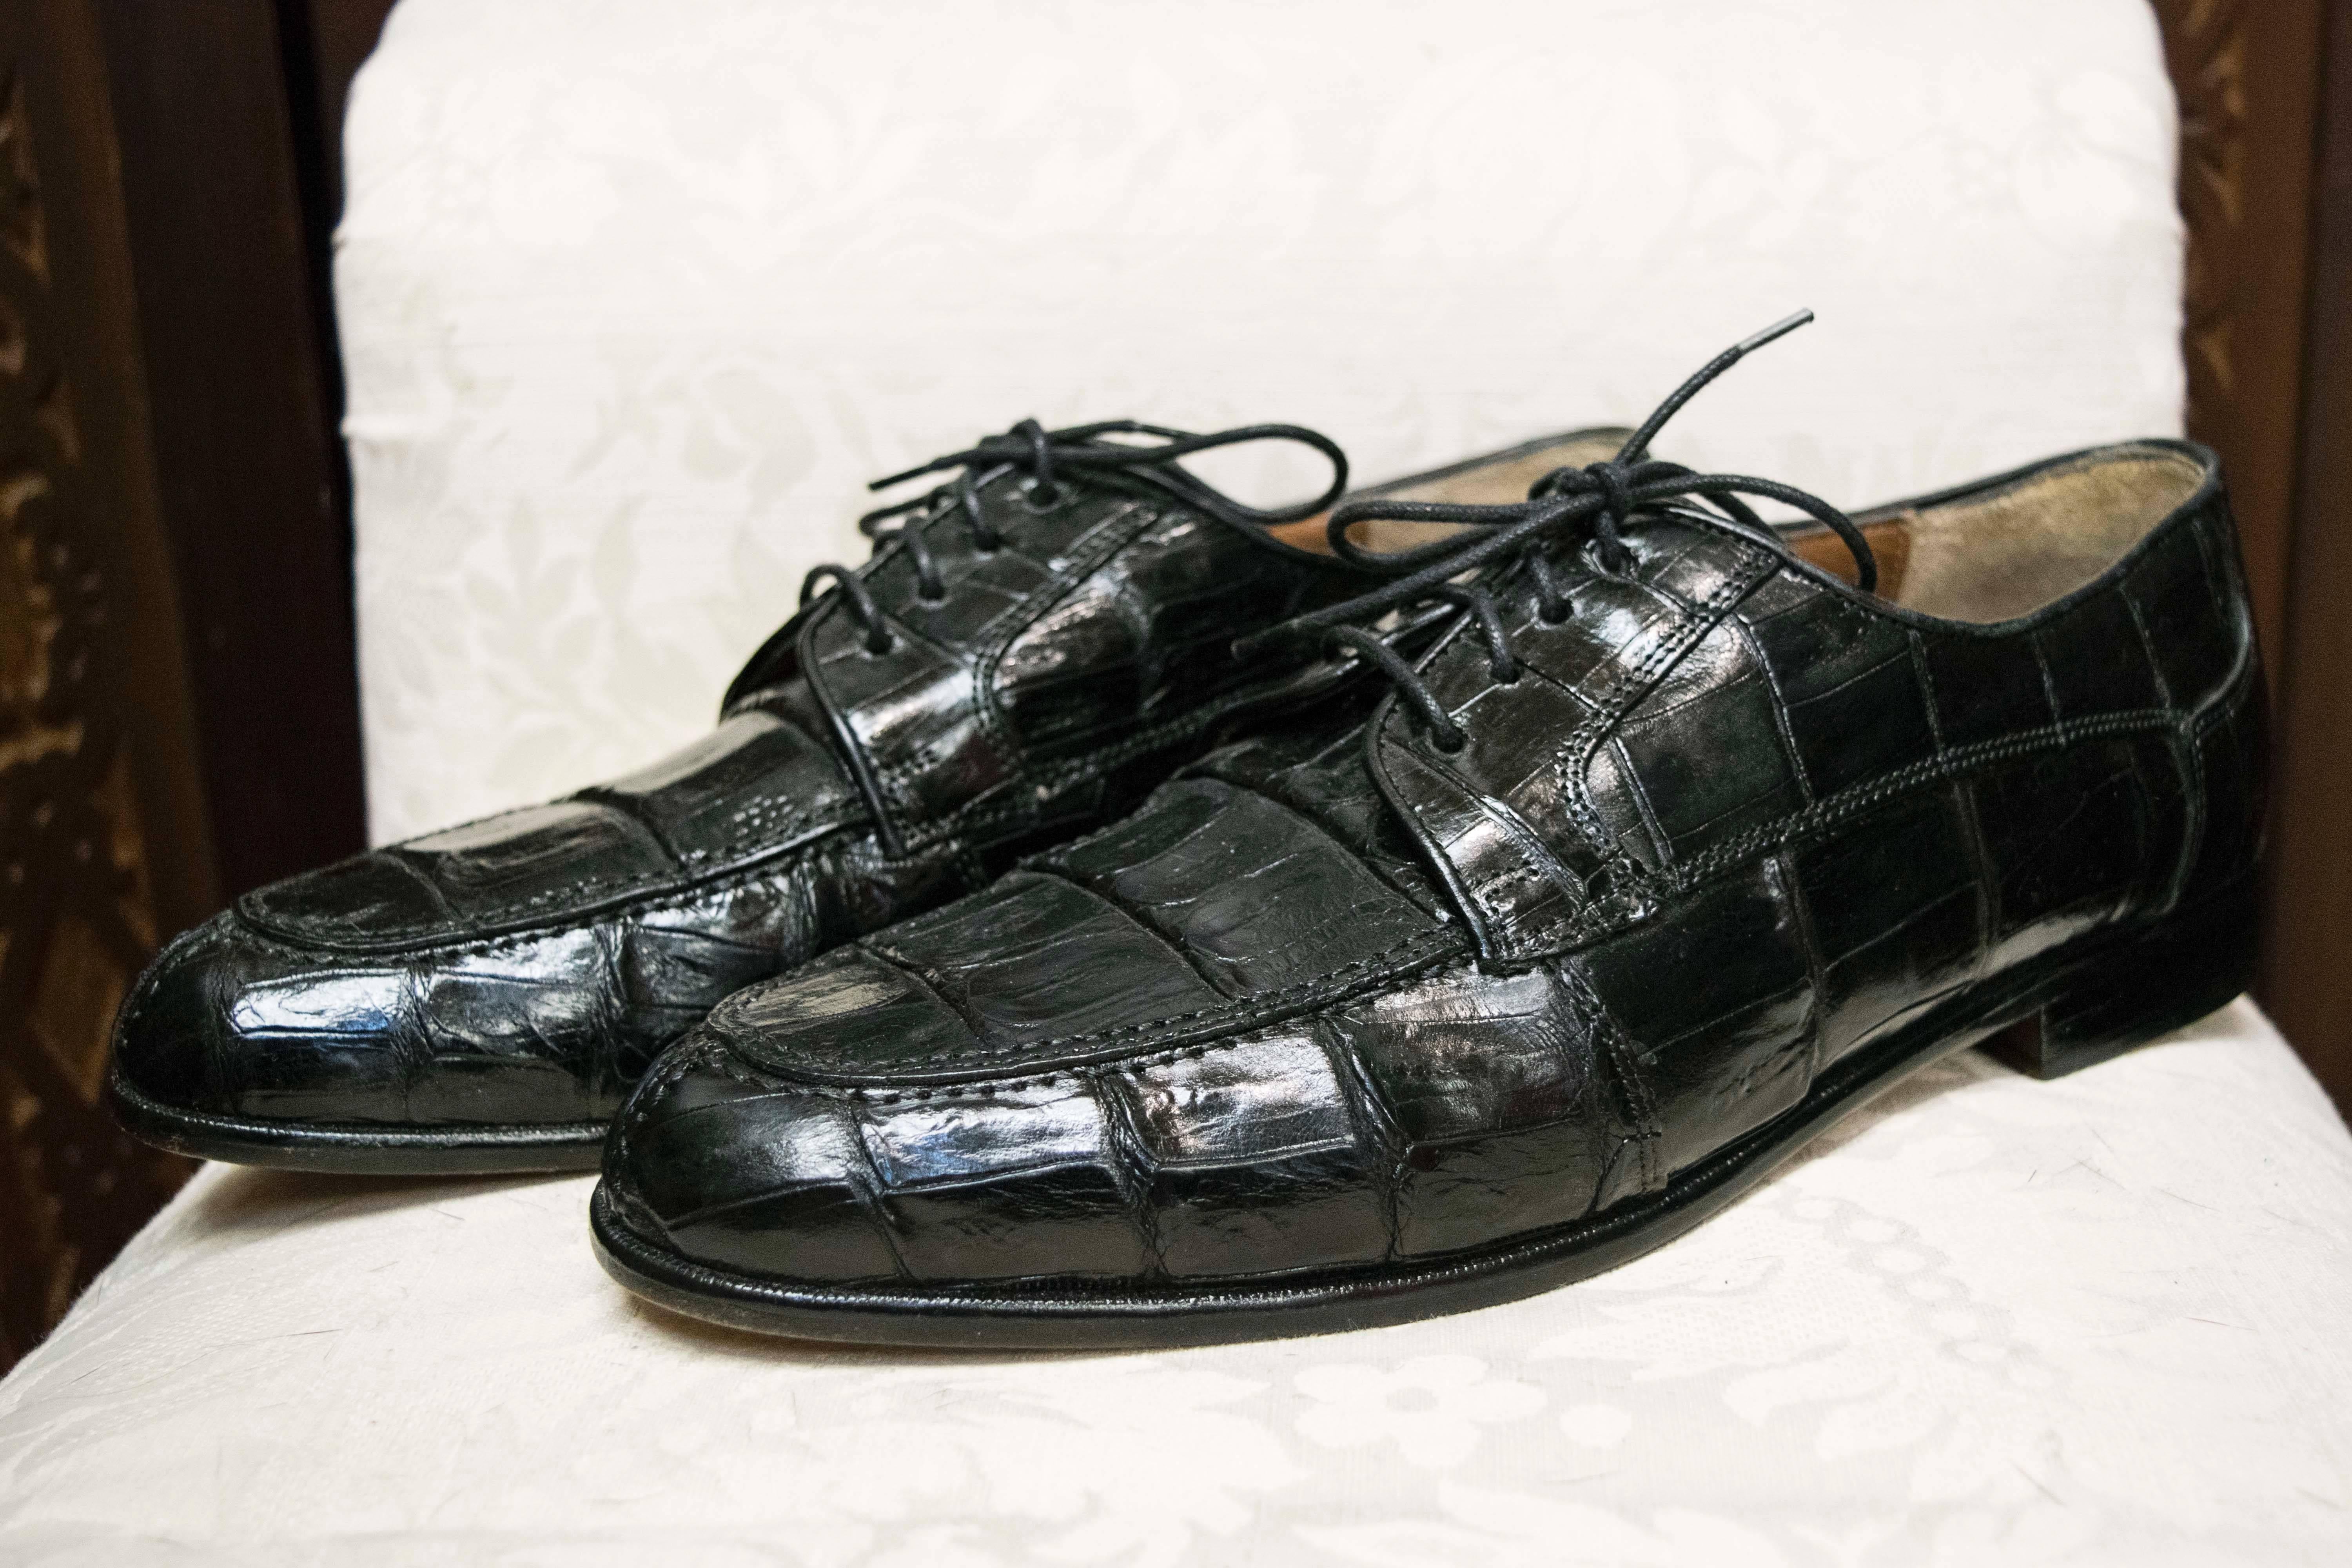 Belvedere Mens Crocodile Shoes

Genuine Crocodile shoes size 10.5 mens